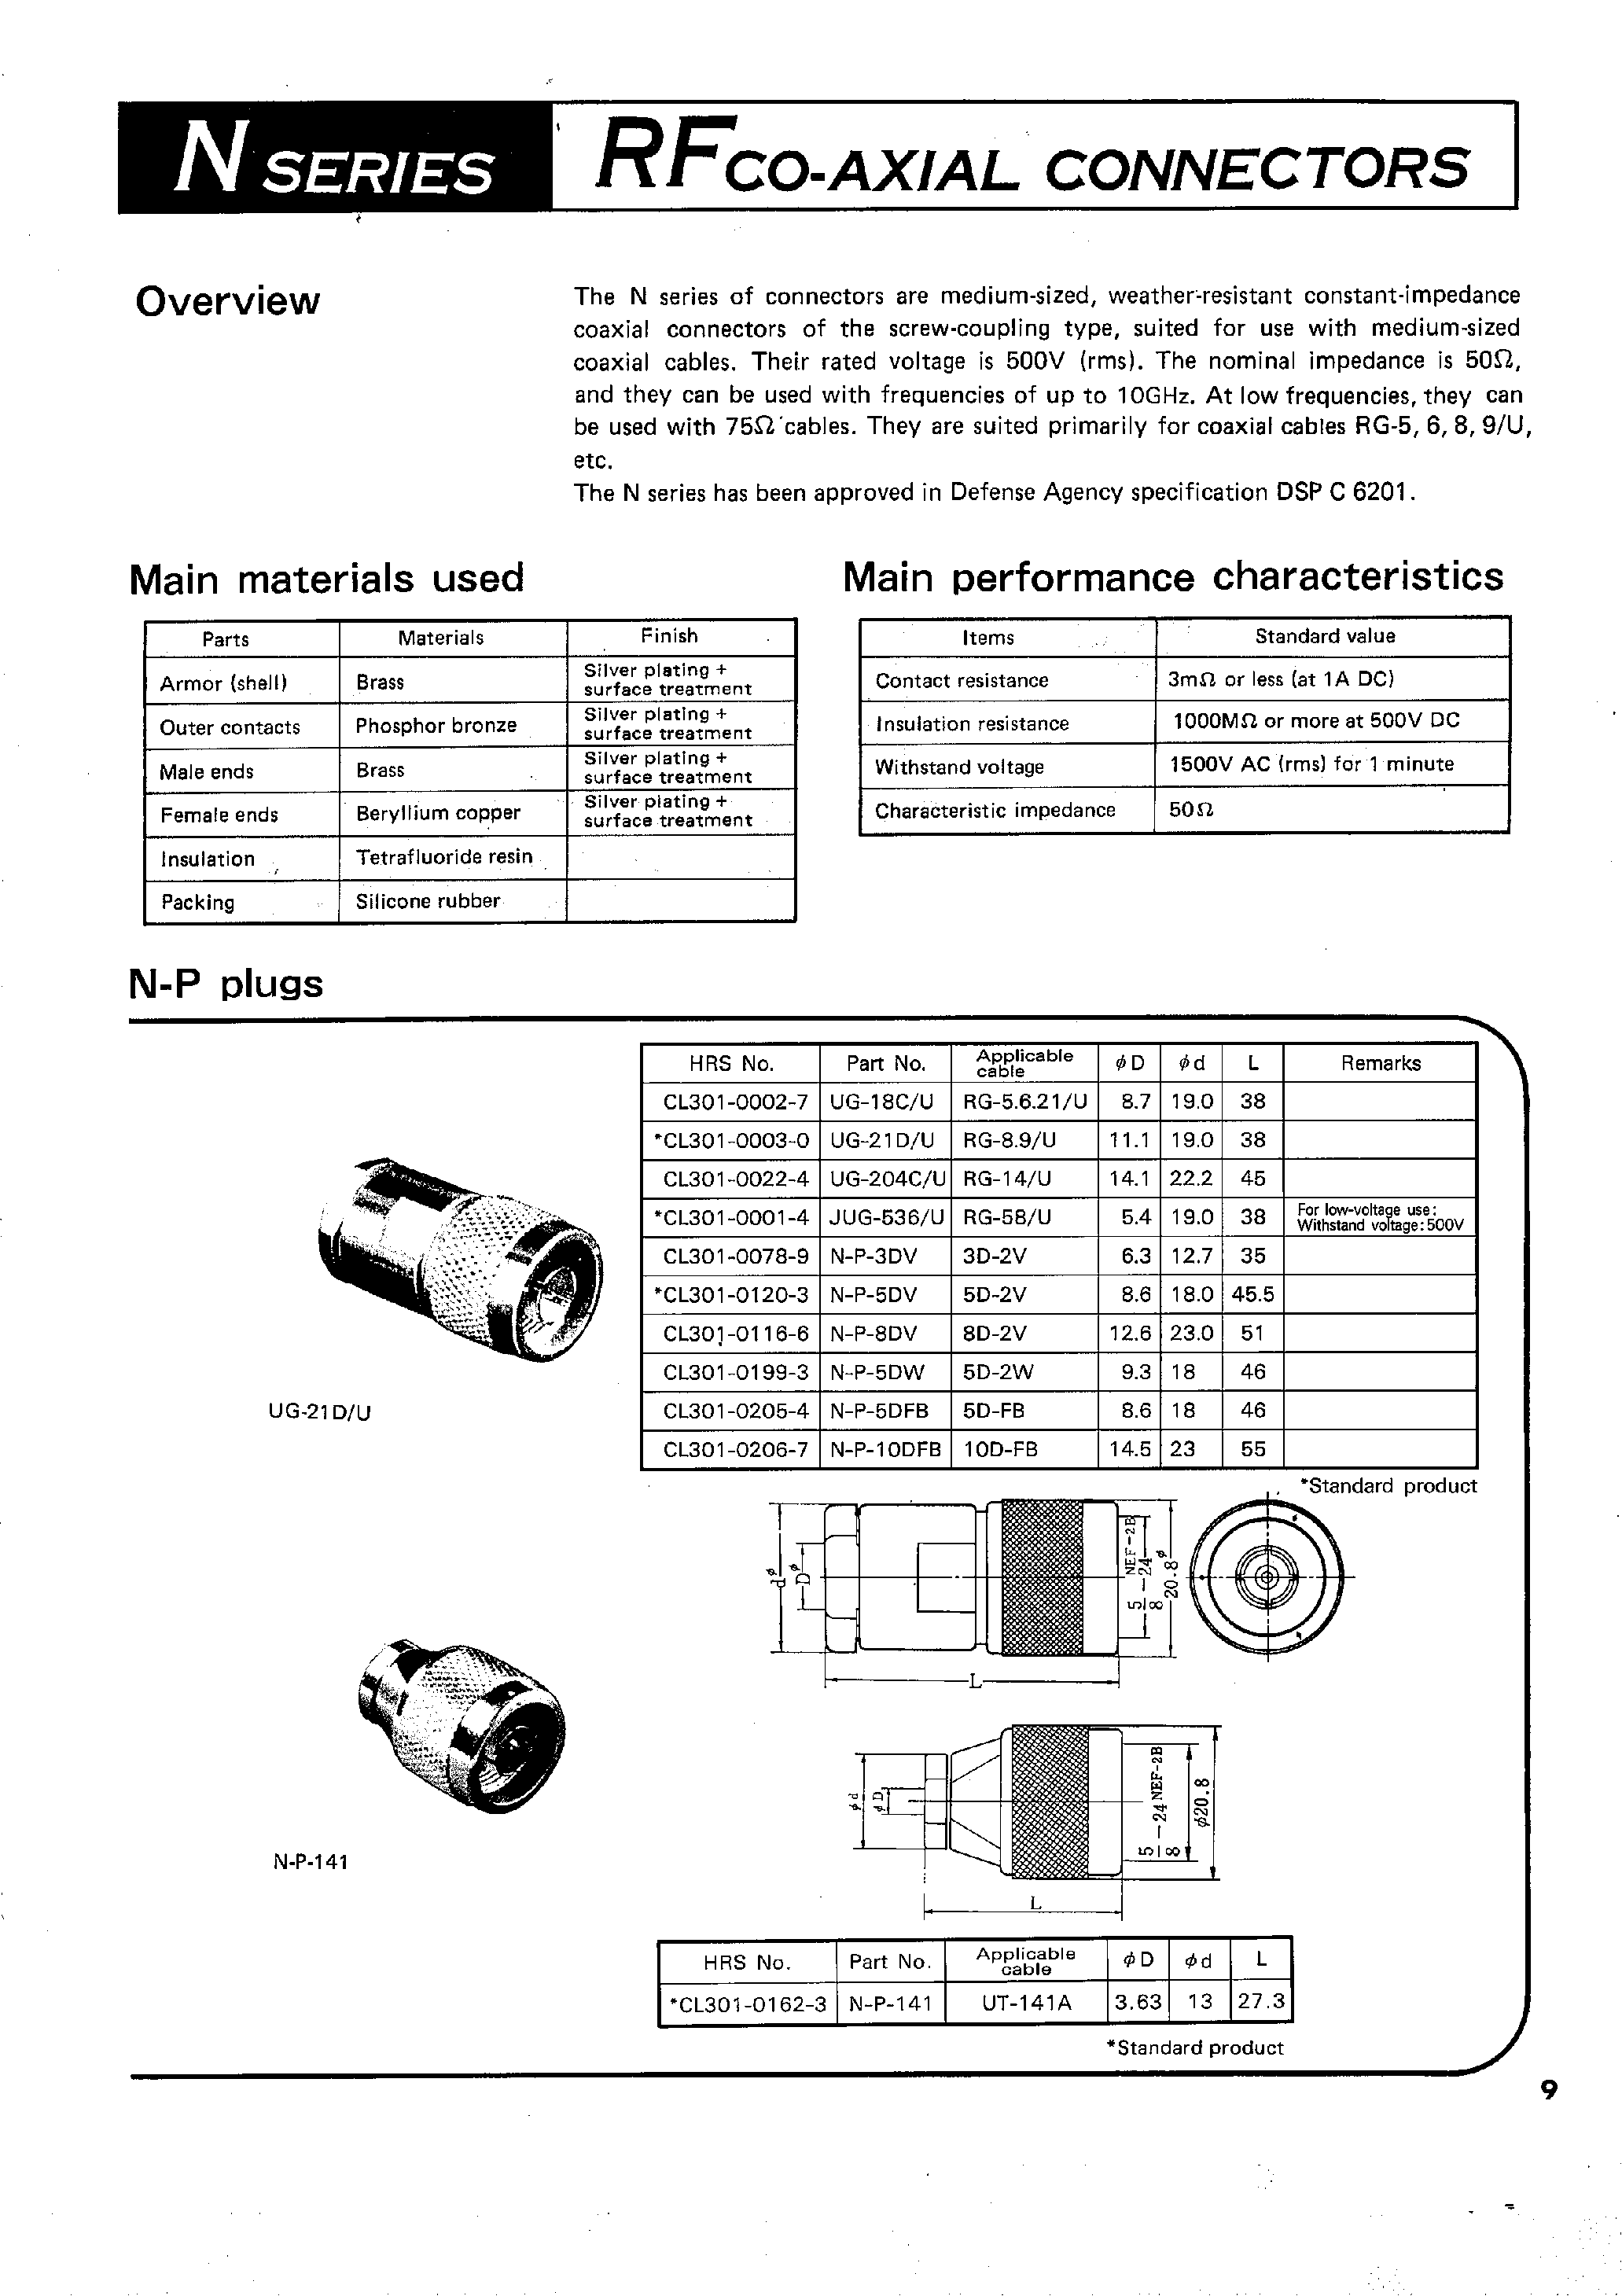 Datasheet N-P-141 - RFCO-AXIAL CONNECTORS page 1